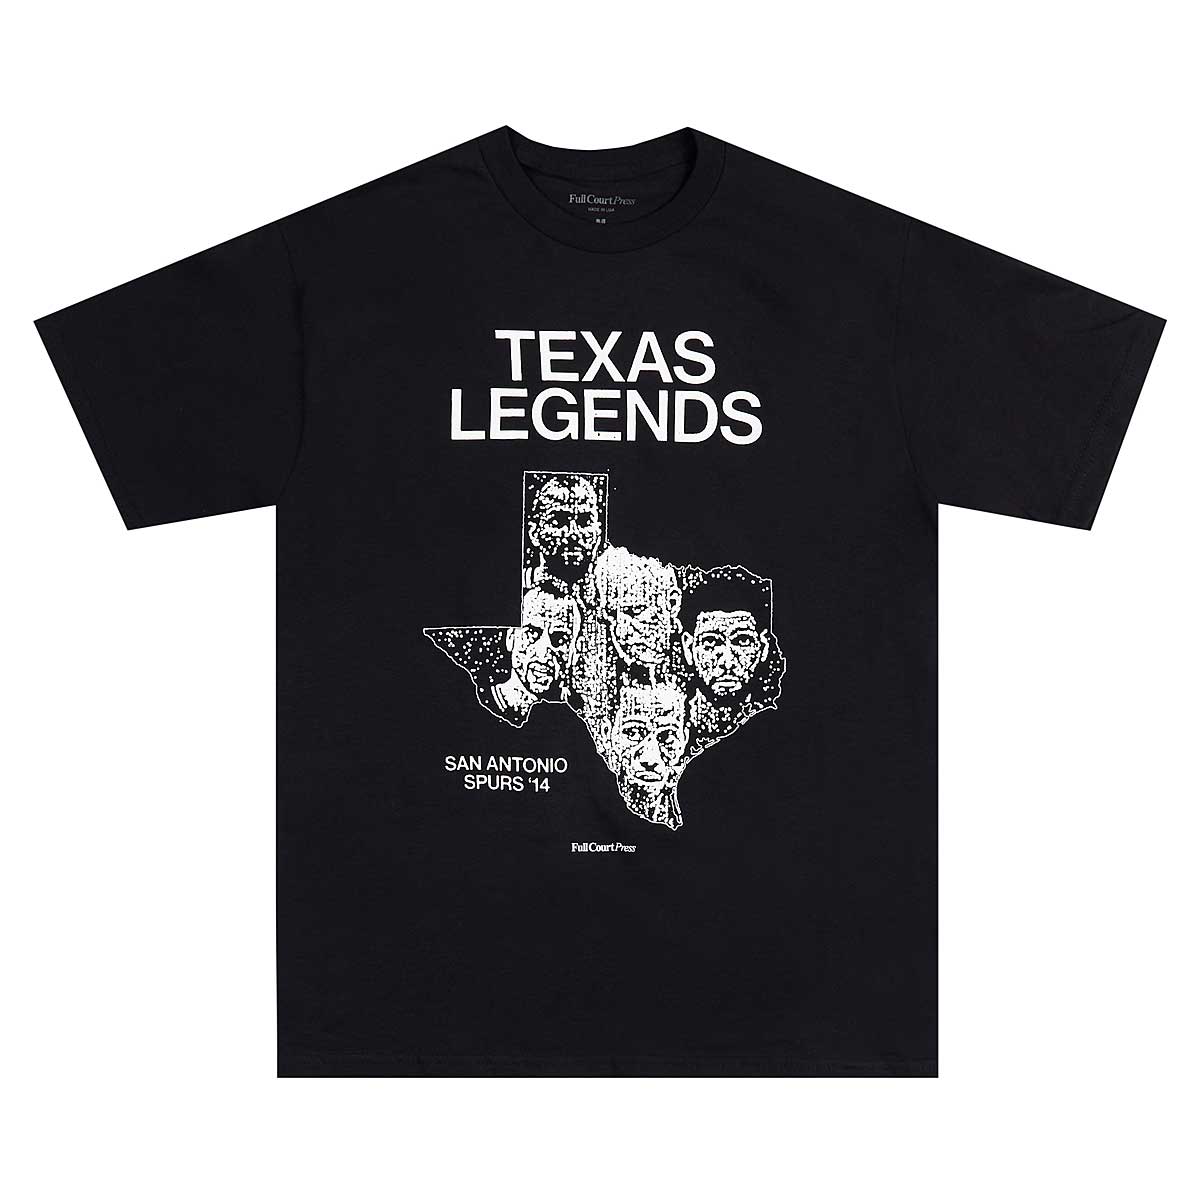 Full Court Press Texas Legends T-Shirt, Black